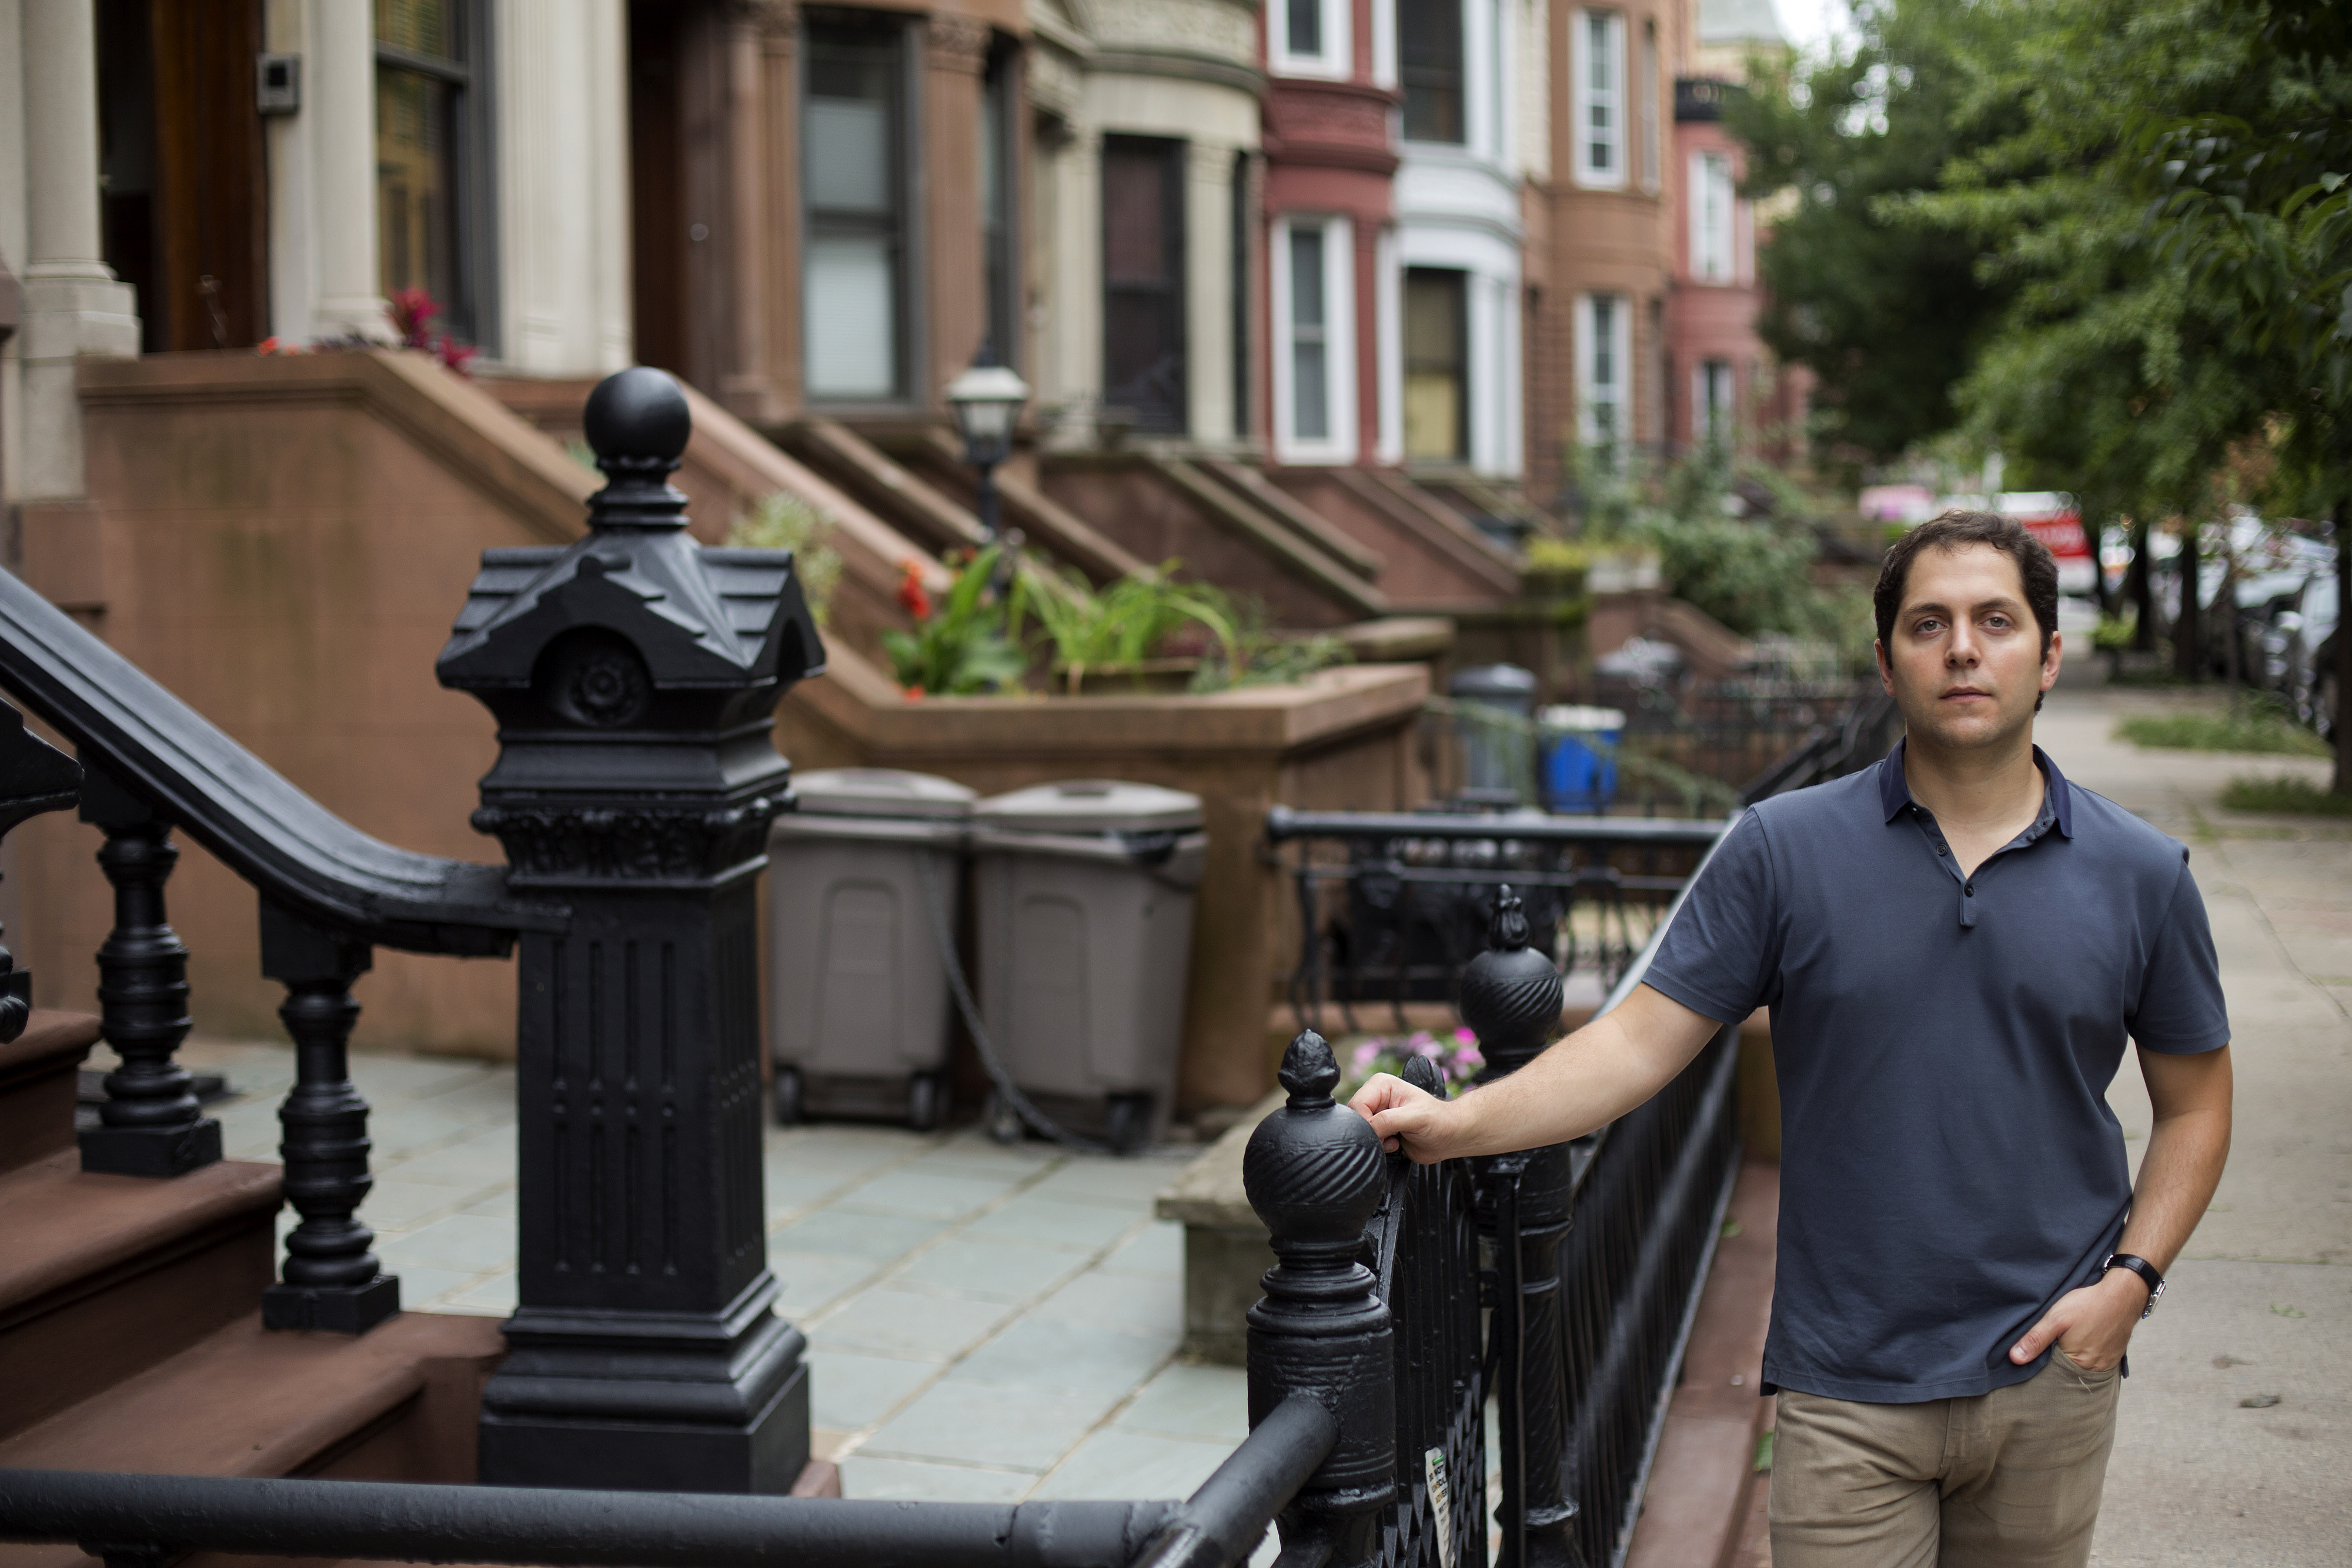 CityShares founder Seth Weissman is seeking investors for neighbourhood-focused funds. Photo: Bloomberg